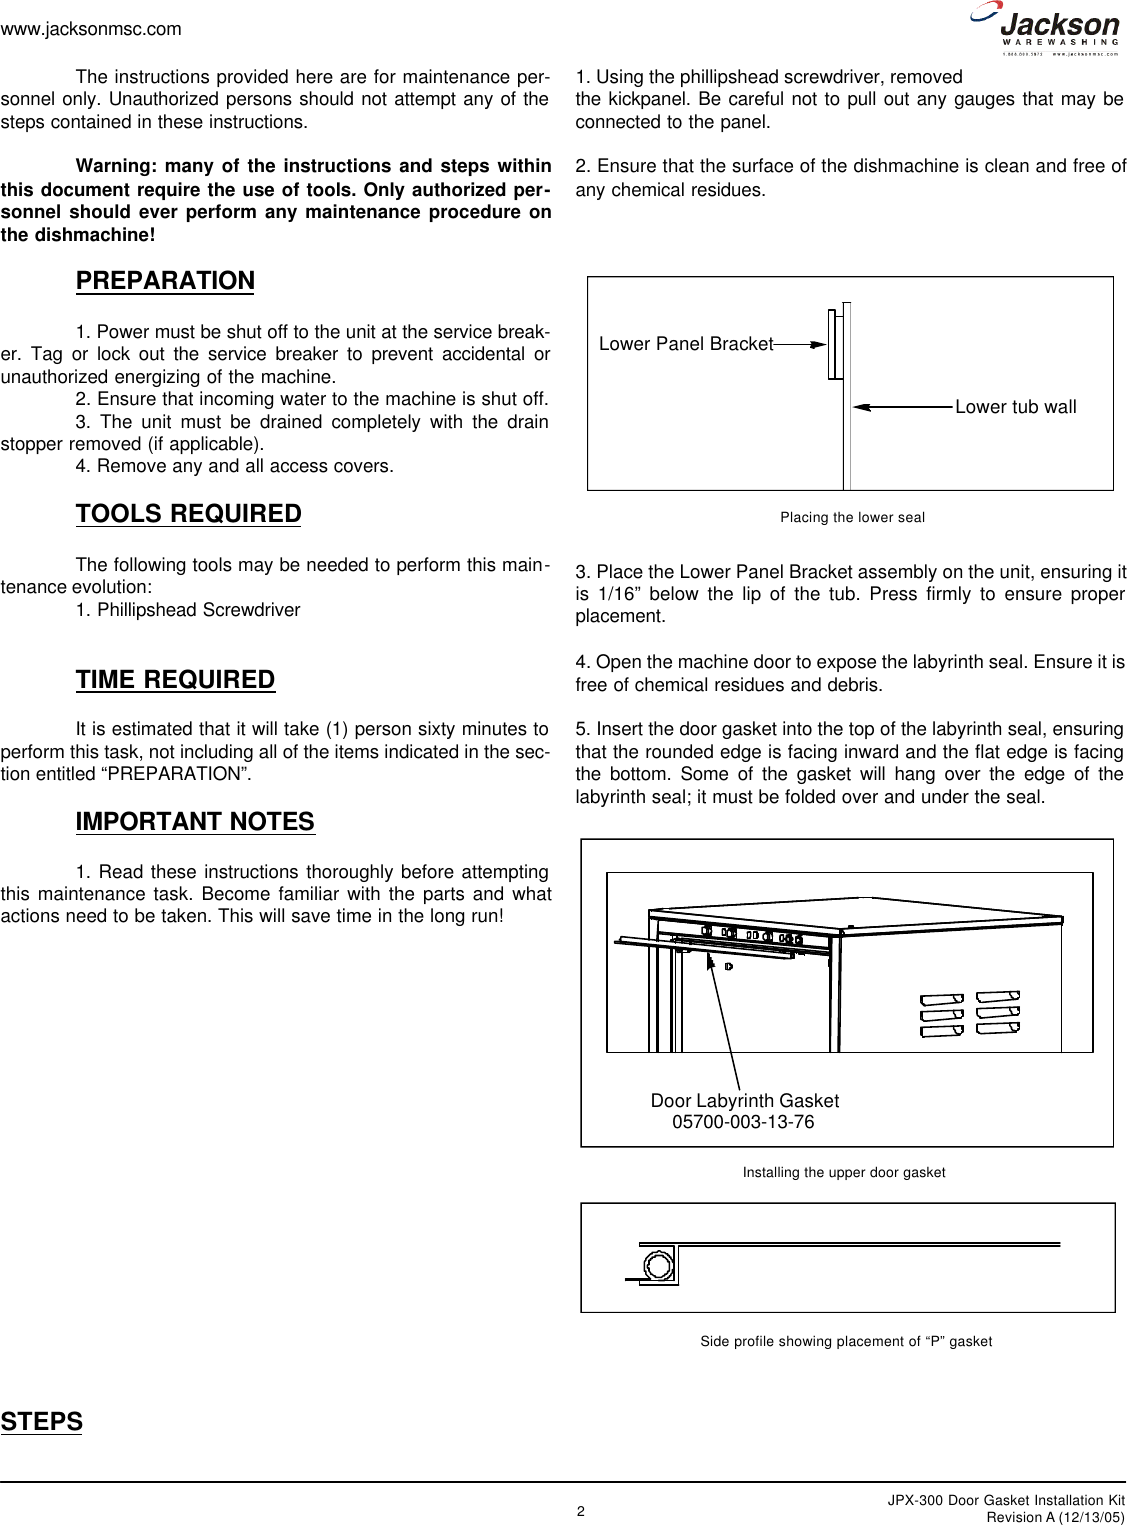 Jackson Door Gasket Kit Jpx 300 Users Manual